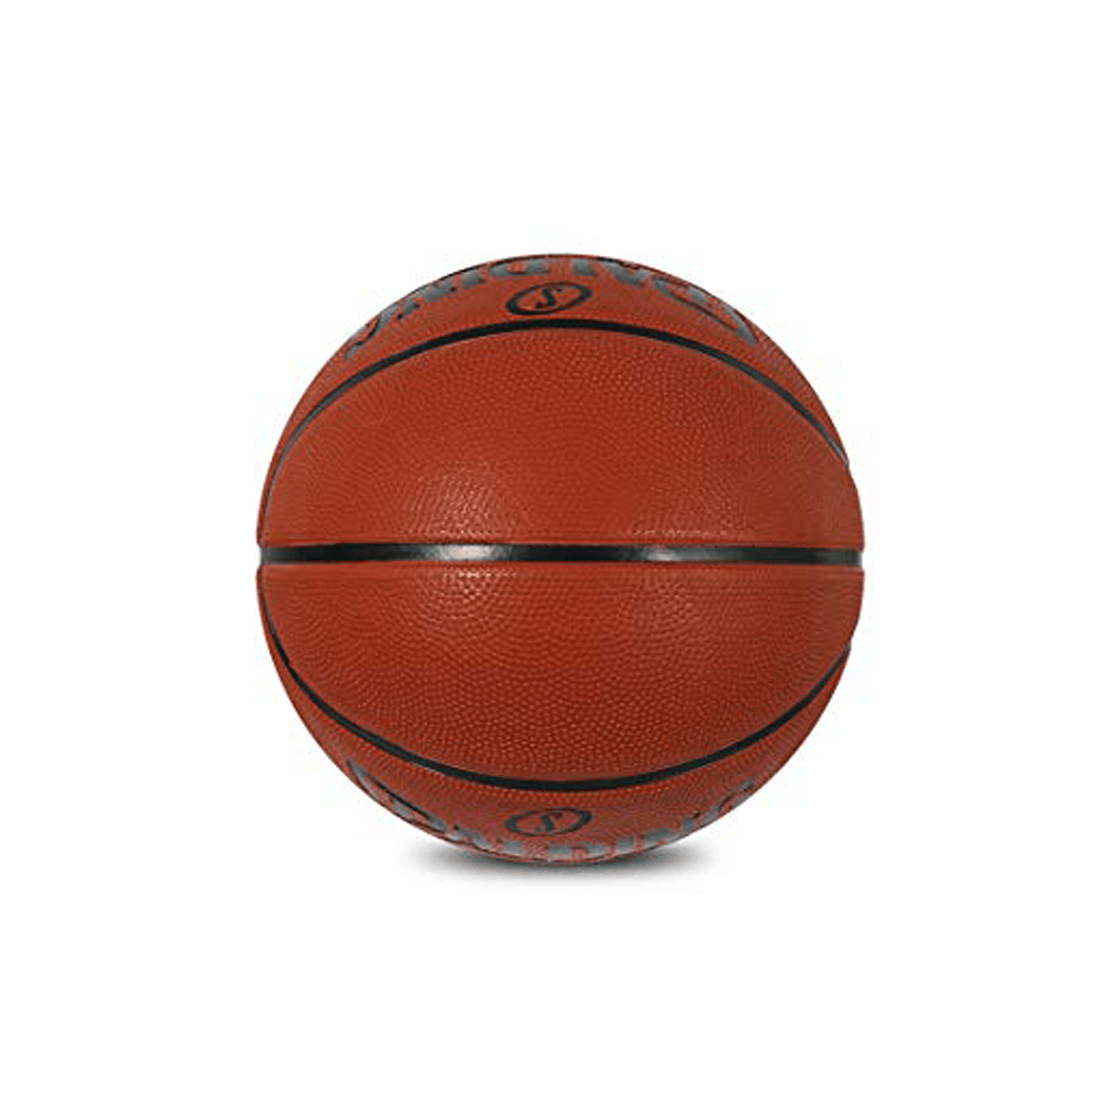 Spalding Crossover Basketball - Shoply